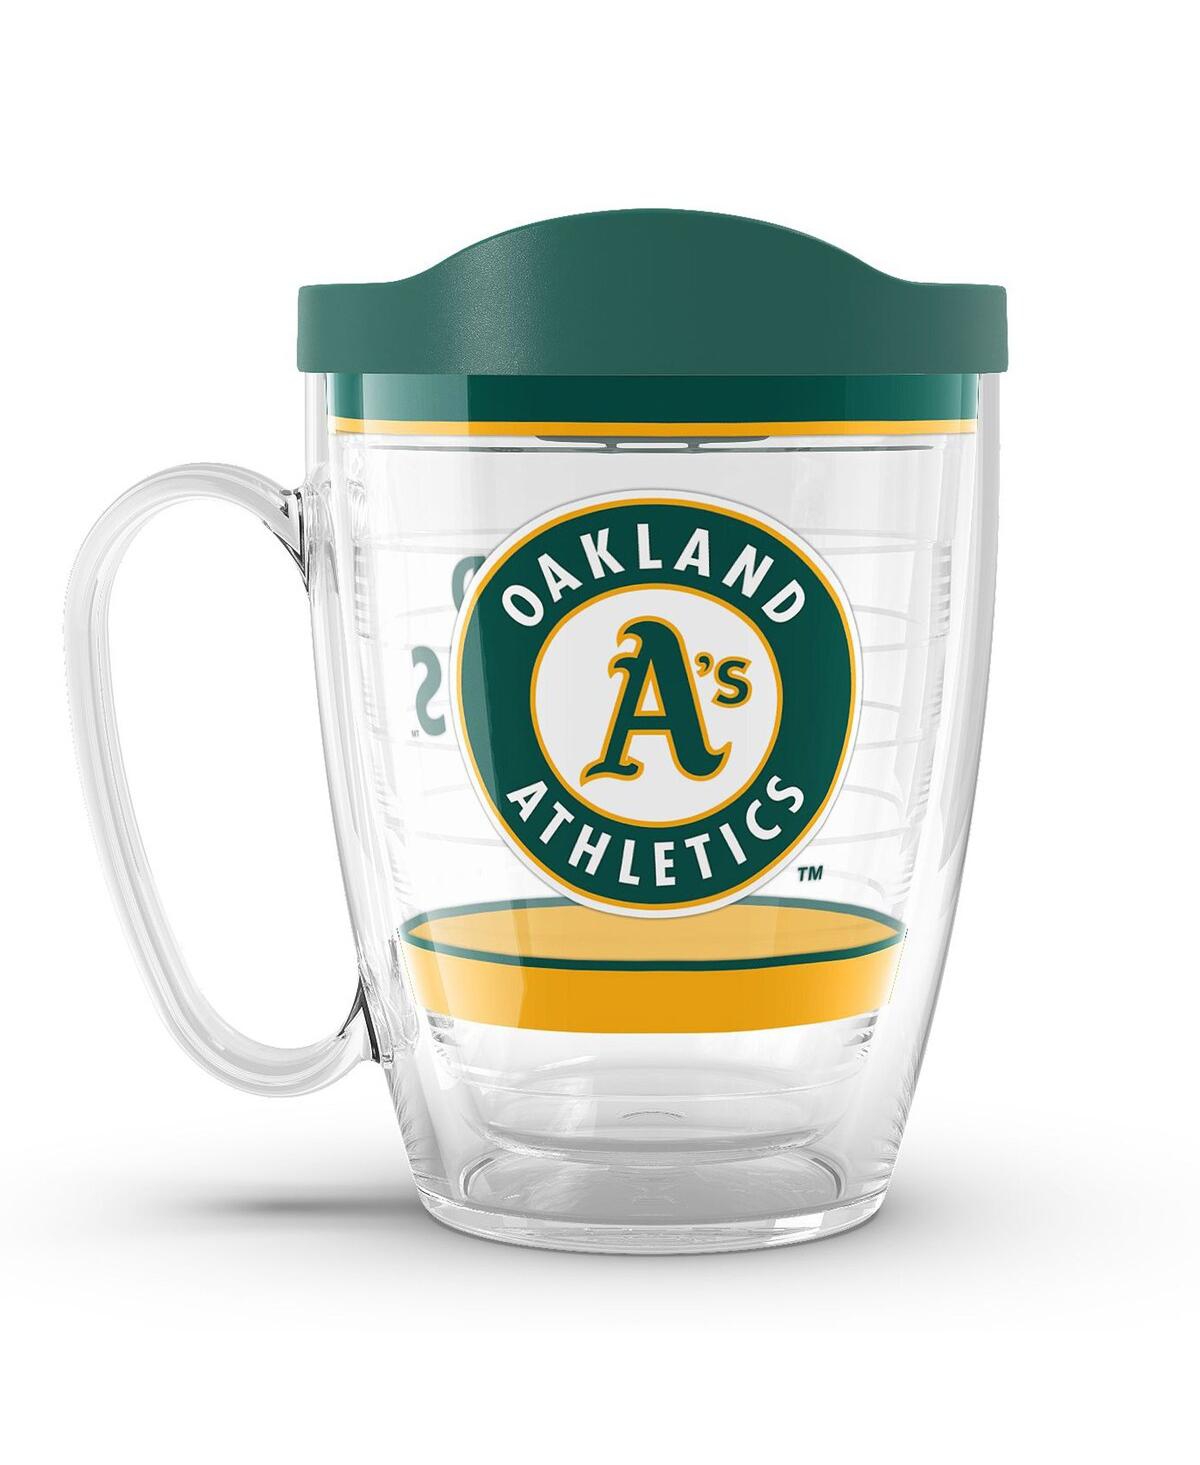 Tervis Tumbler Oakland Athletics 16 oz Tradition Classic Mug In Green